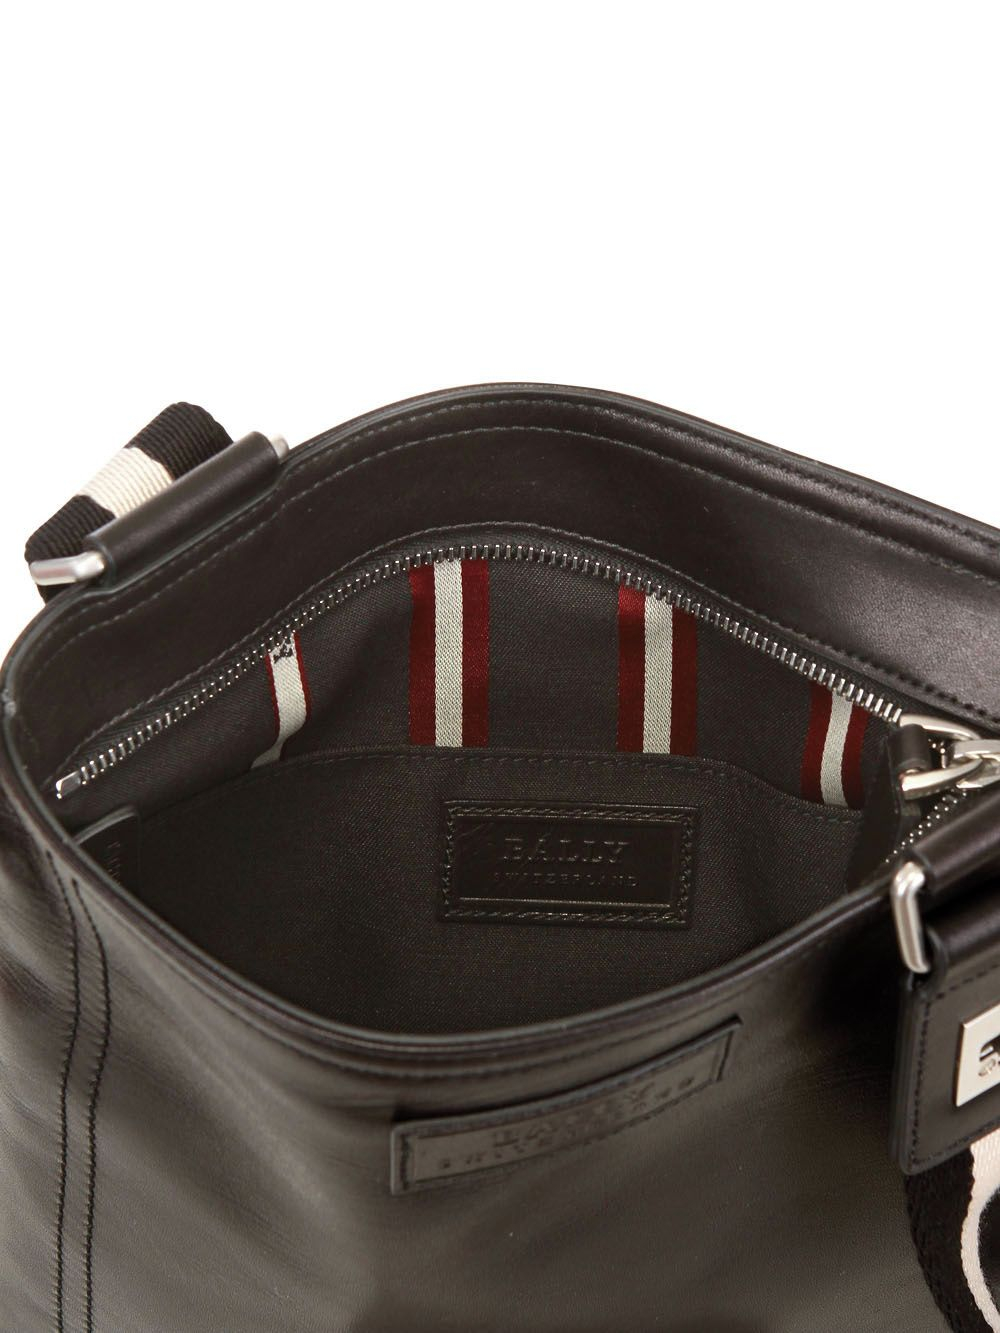 Bally Leather Crossbody Bag in Black - Lyst